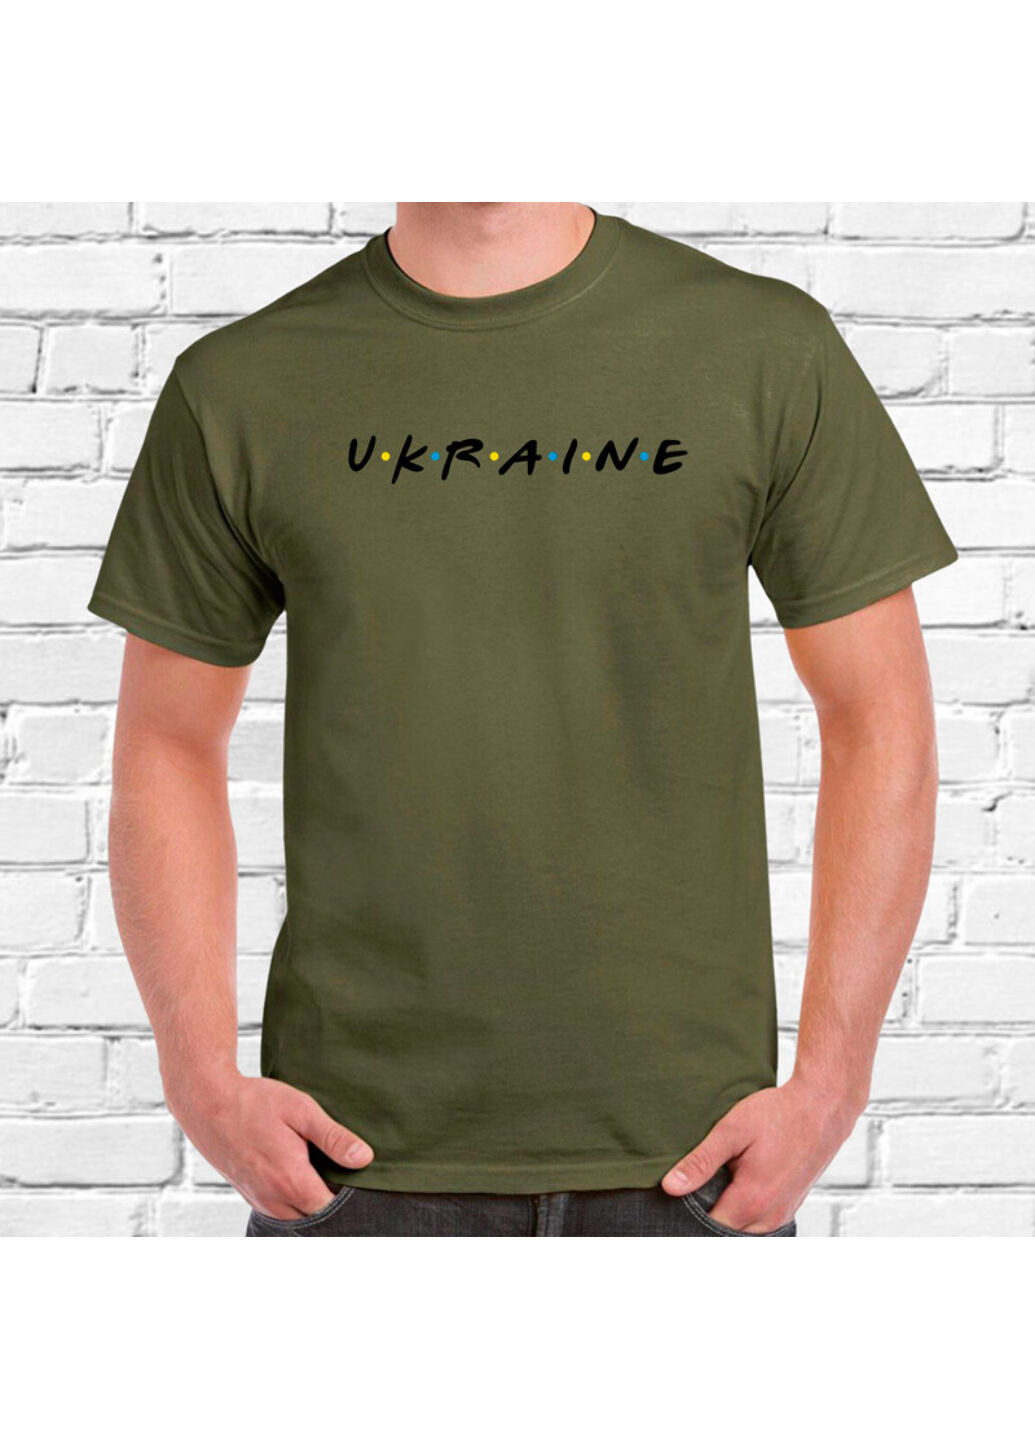 Хаки (оливковая) футболка зелена з вишивкою ukraine мужская хаки l No Brand